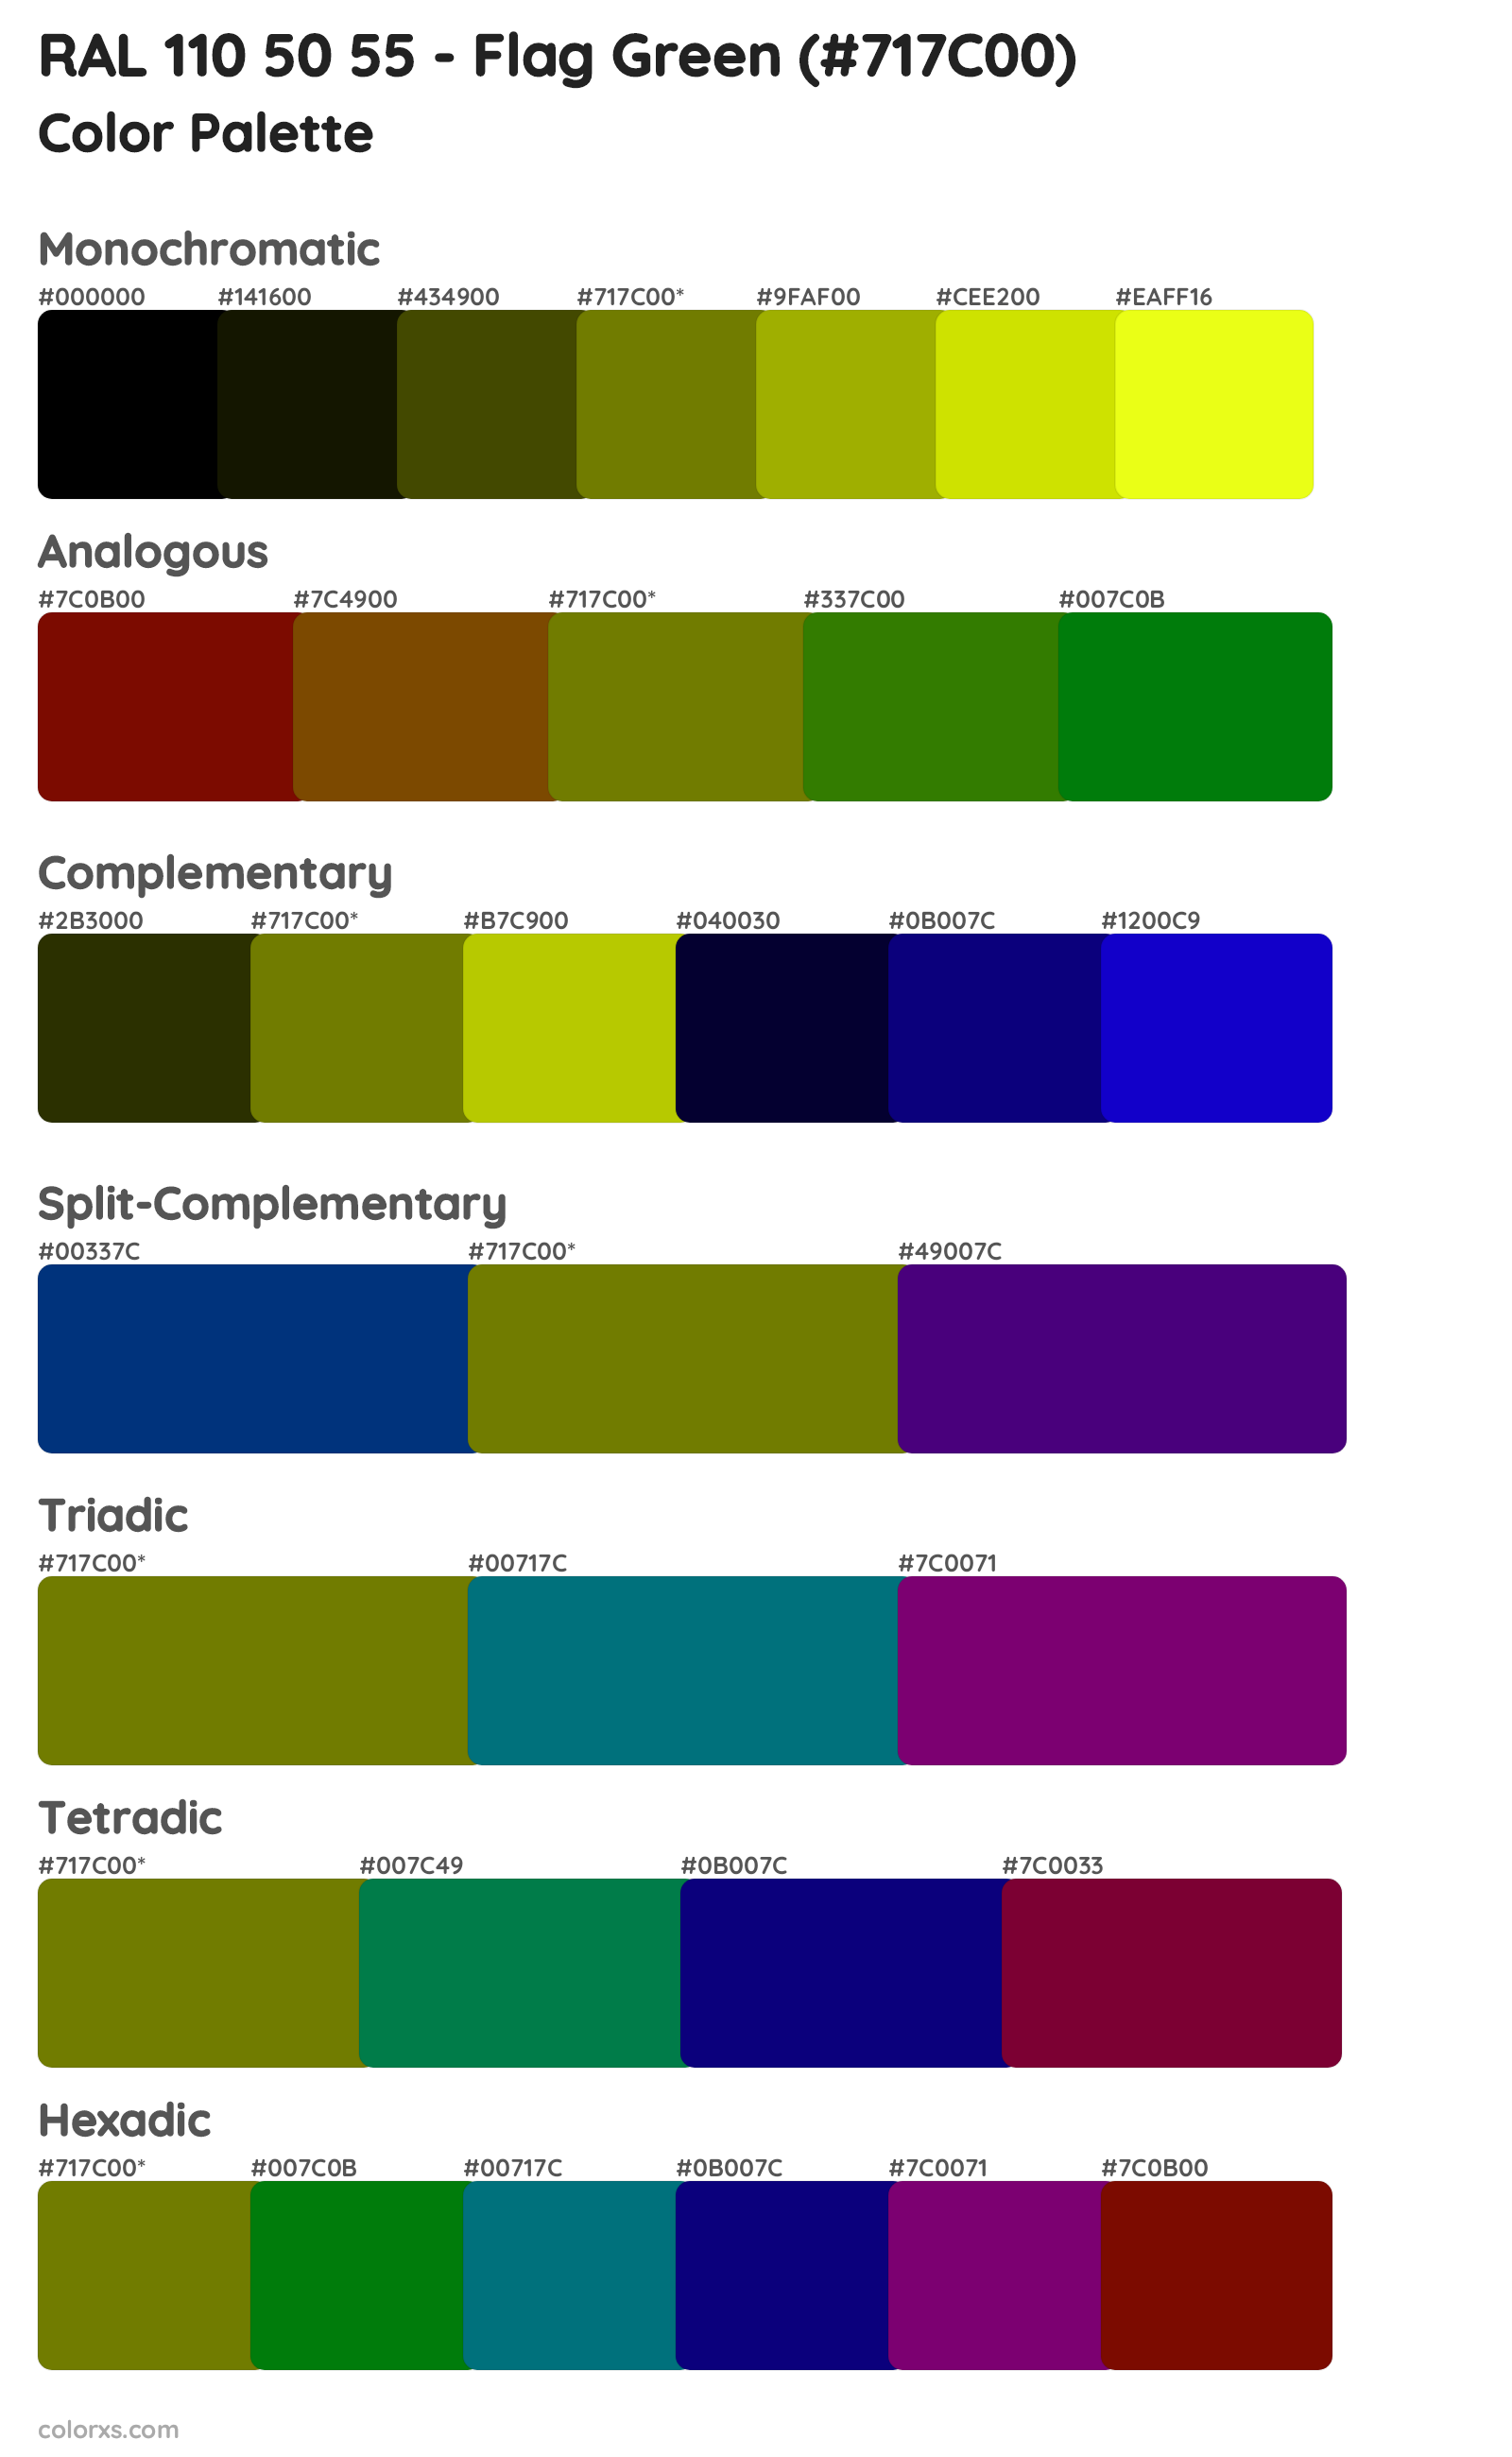 RAL 110 50 55 - Flag Green Color Scheme Palettes